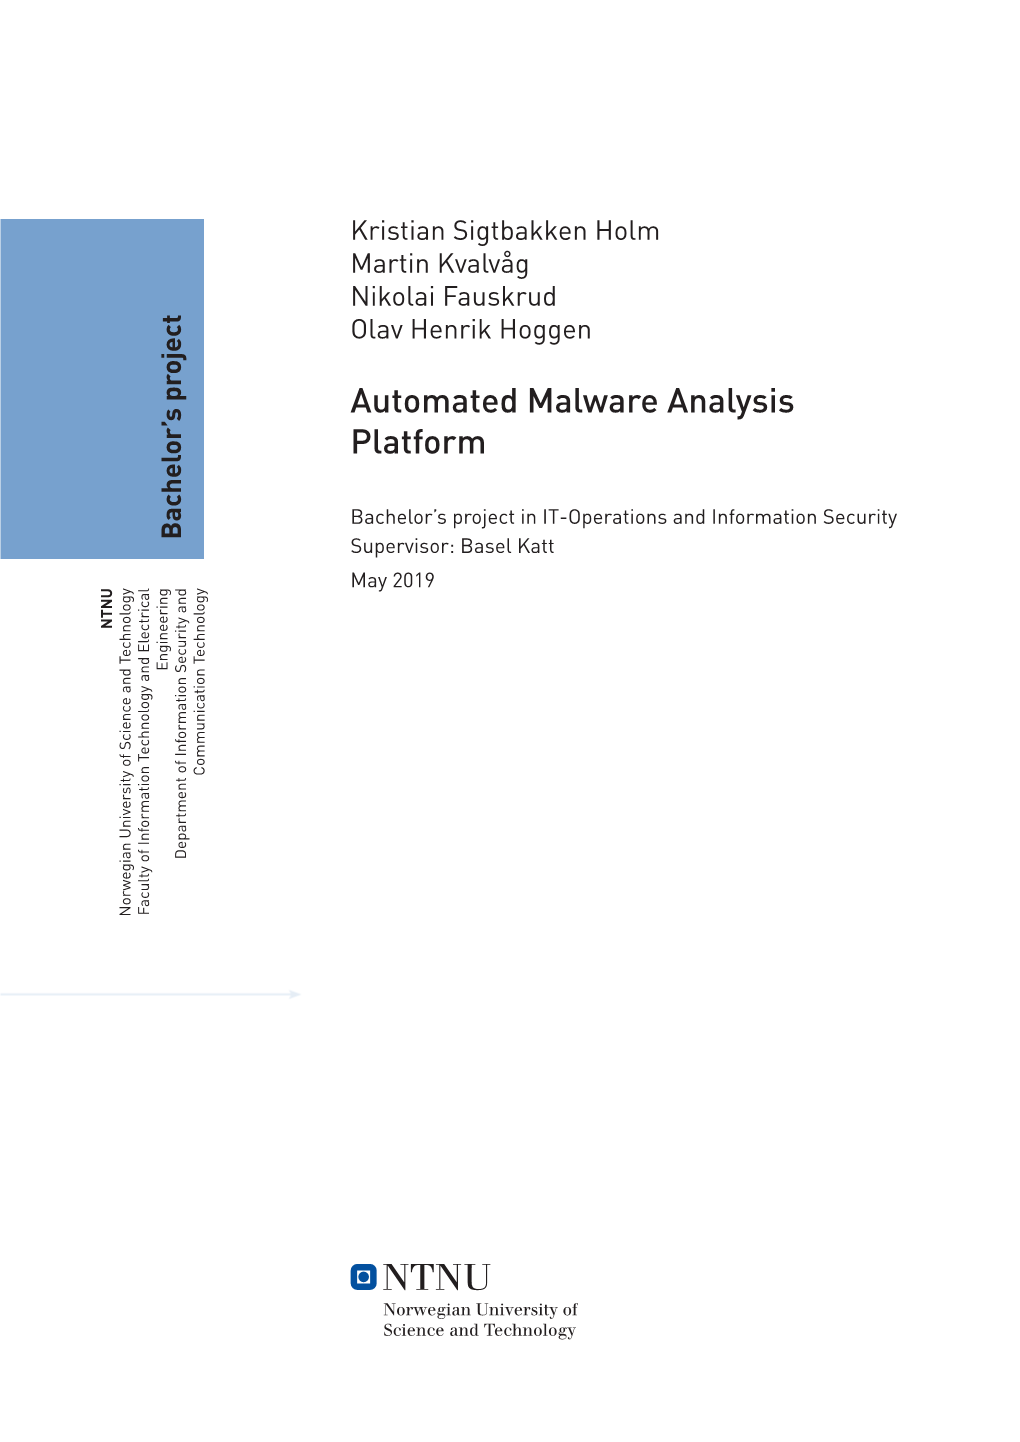 Automated Malware Analysis Platform